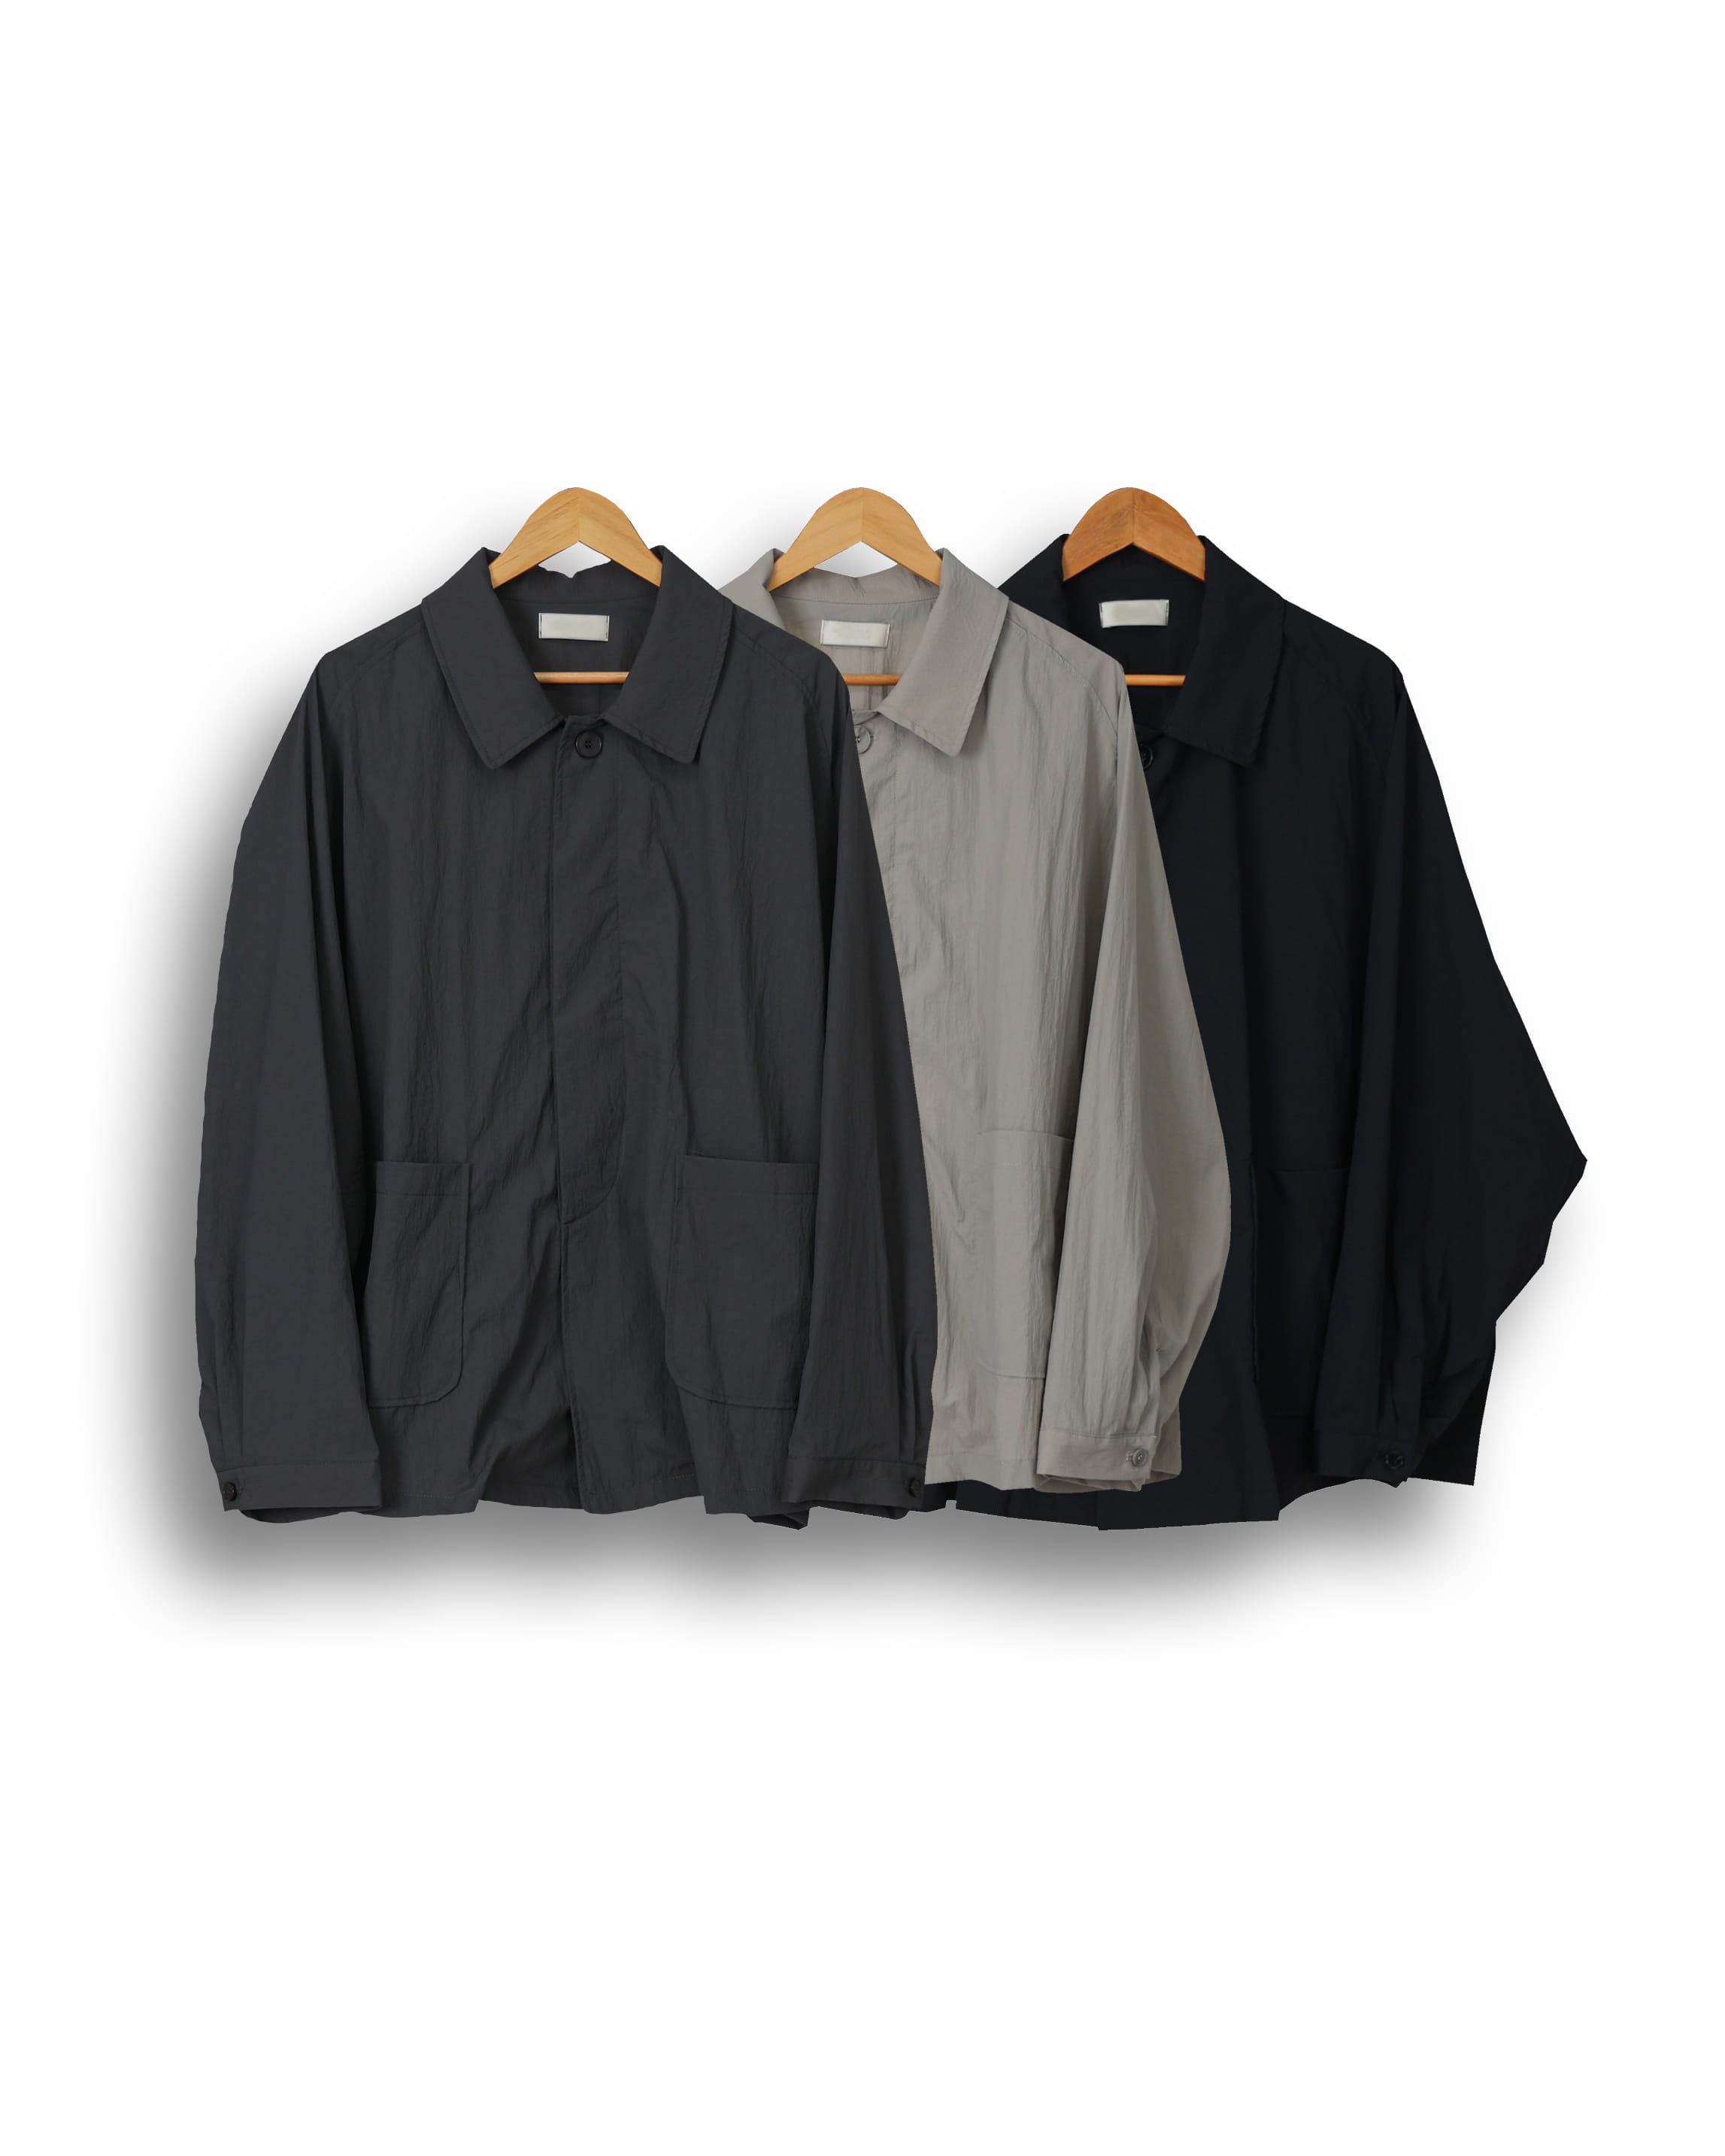 HAVAN Cool Pure Mac Set Up Jacket (Black/Charcoal/Gray)